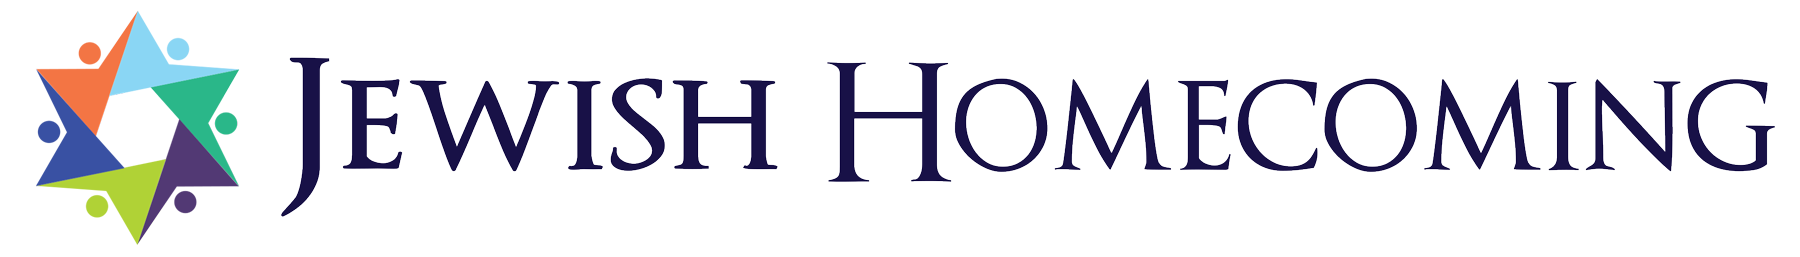 JewishHomecoming_Horizontal_logo